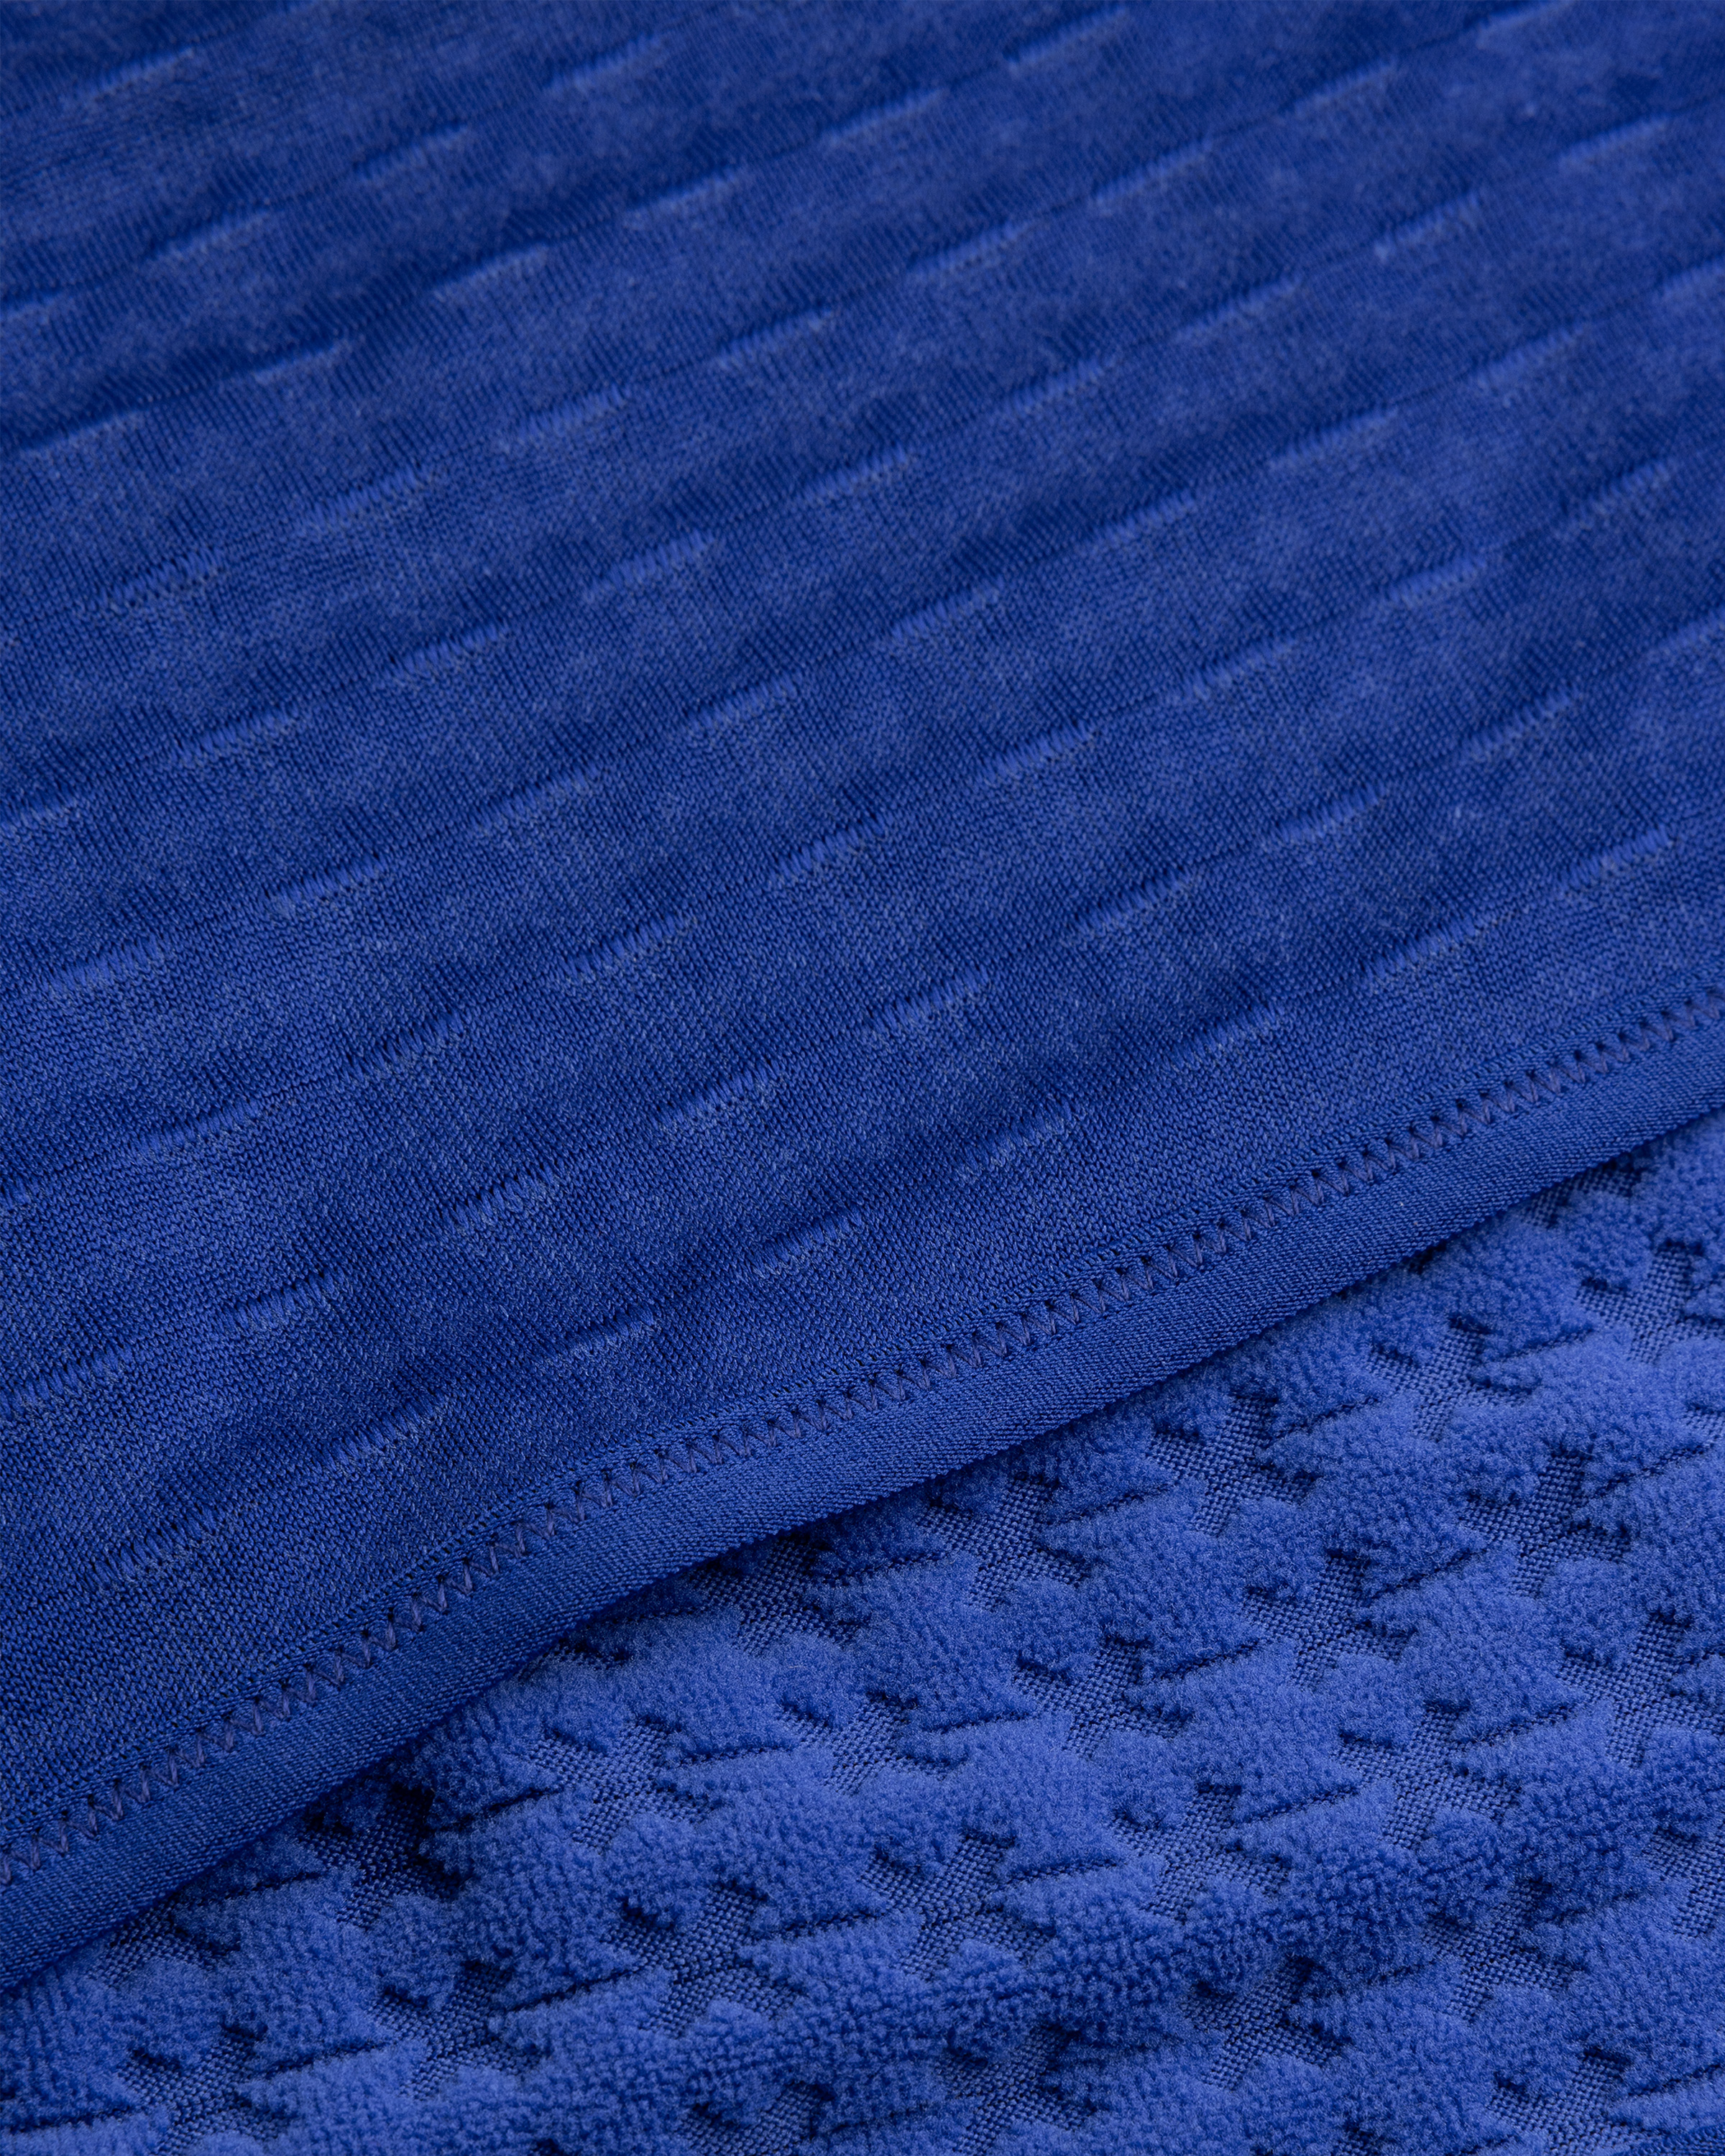 Nike x Patta – Half-Zip Long-Sleeve Top Deep Royal Blue - Zip-Ups - Blue - Image 6